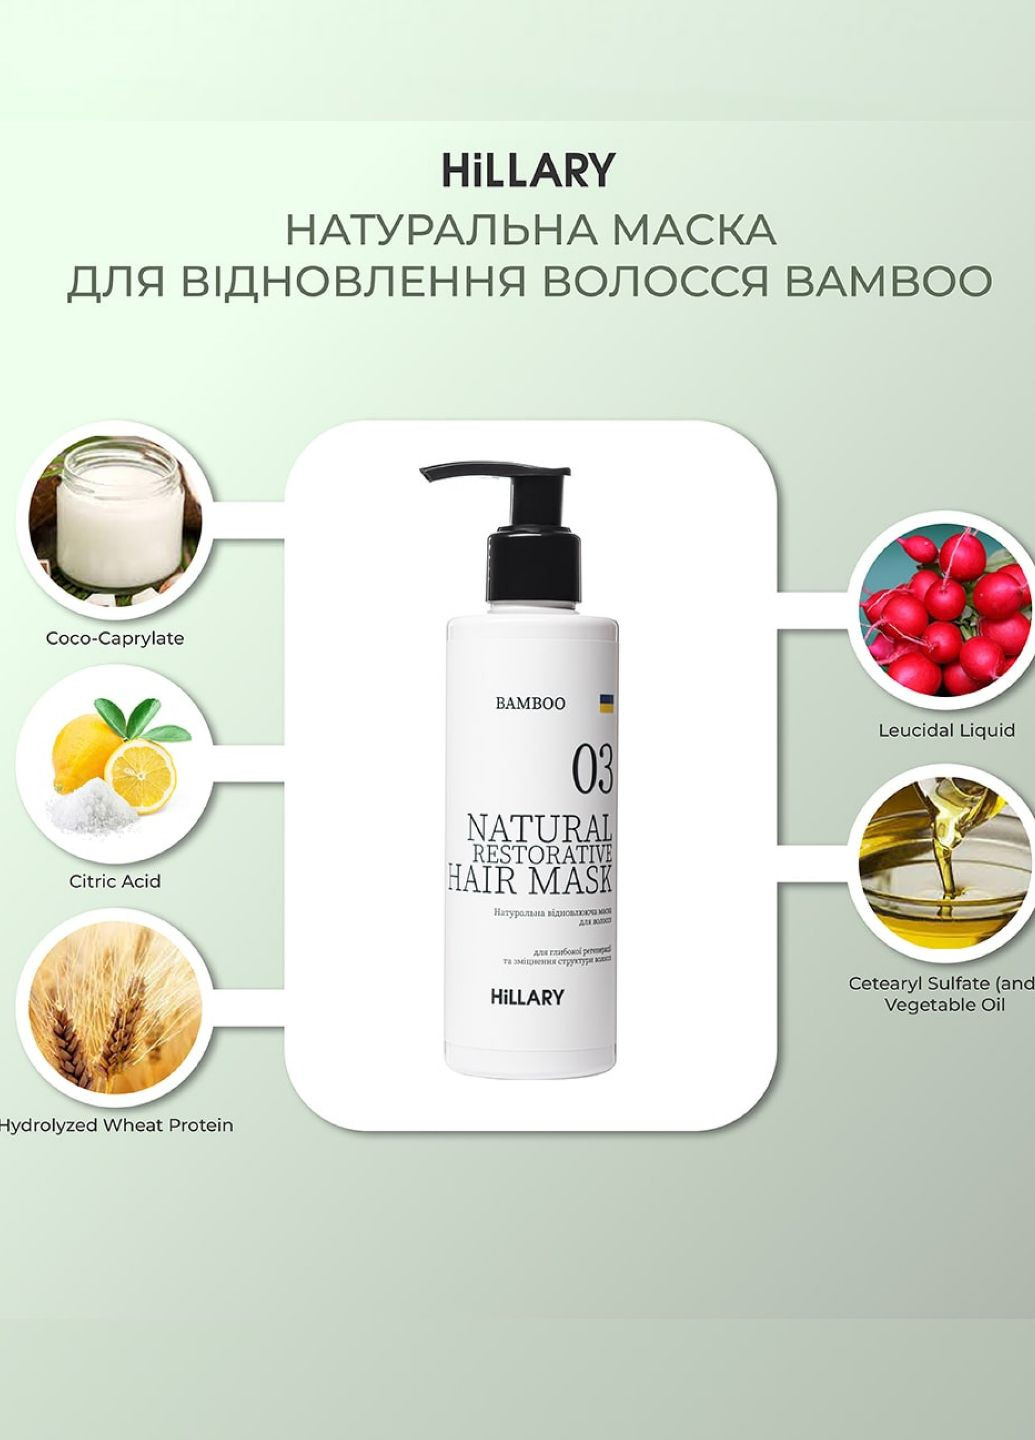 Комплекс для сухого типа волос Aloe Micellar Moisturizing + Натуральная маска Bamboo Hillary (280917424)